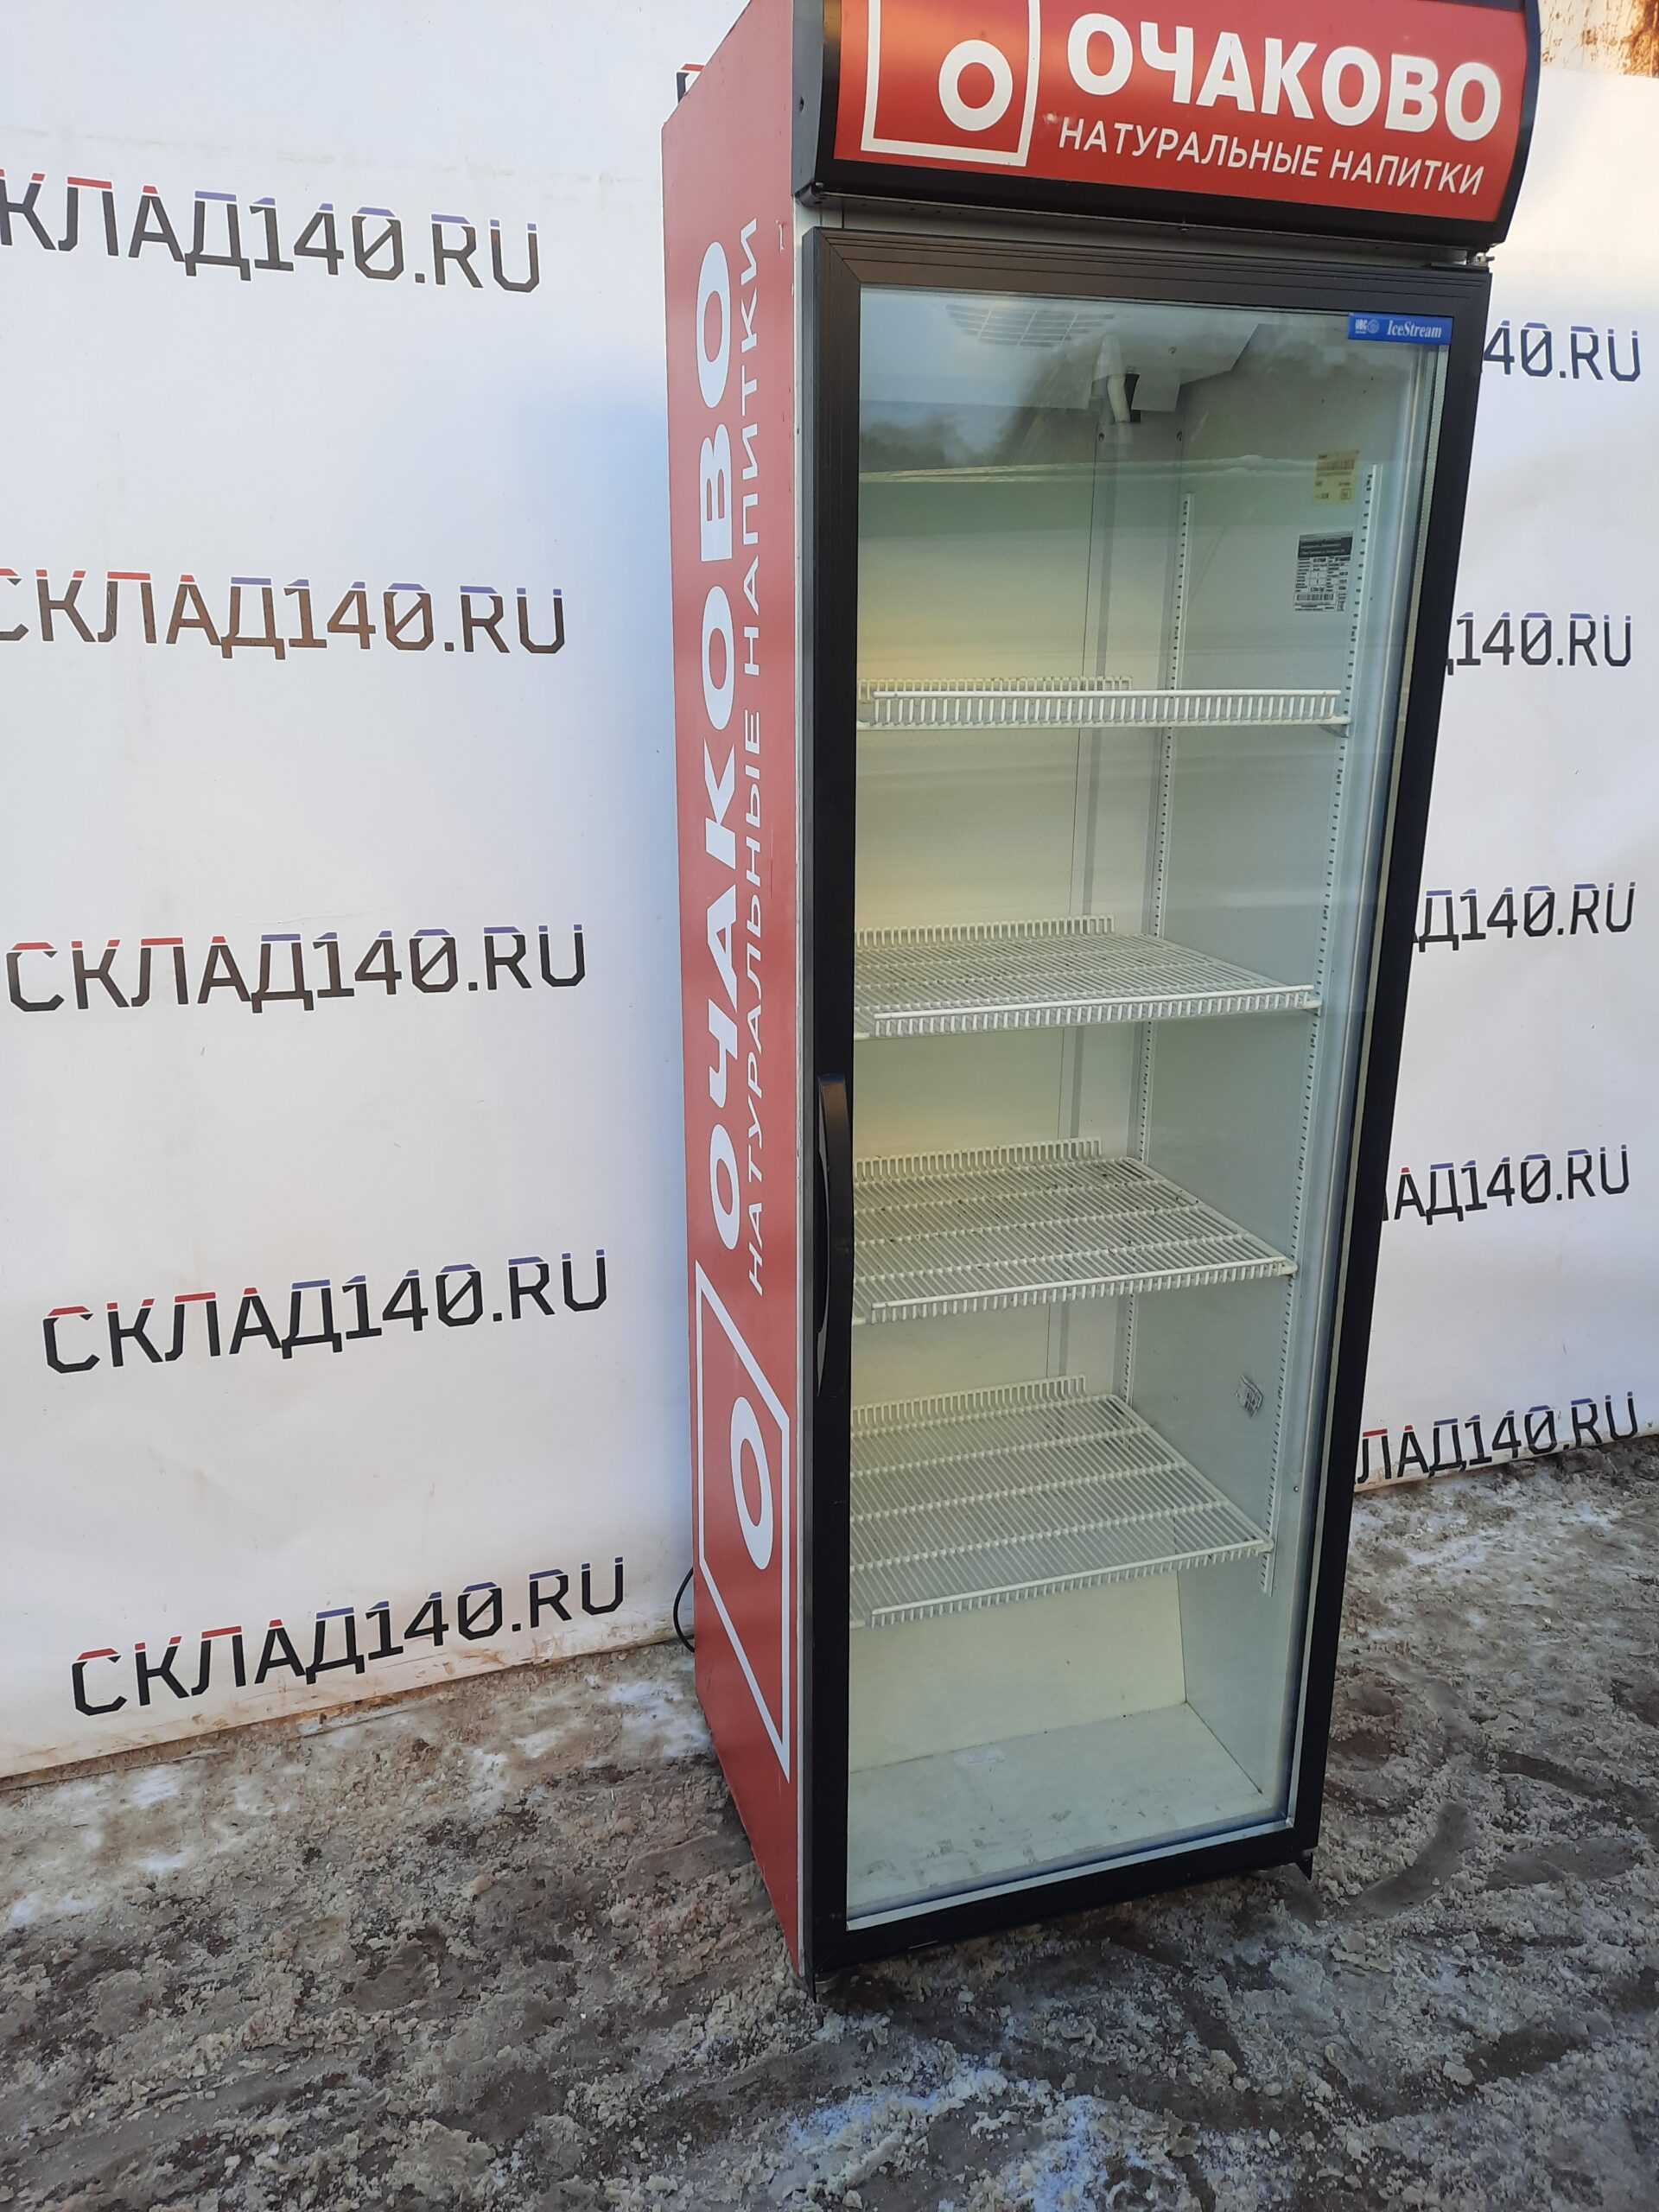 Холодильный шкаф ice stream dynamic характеристики